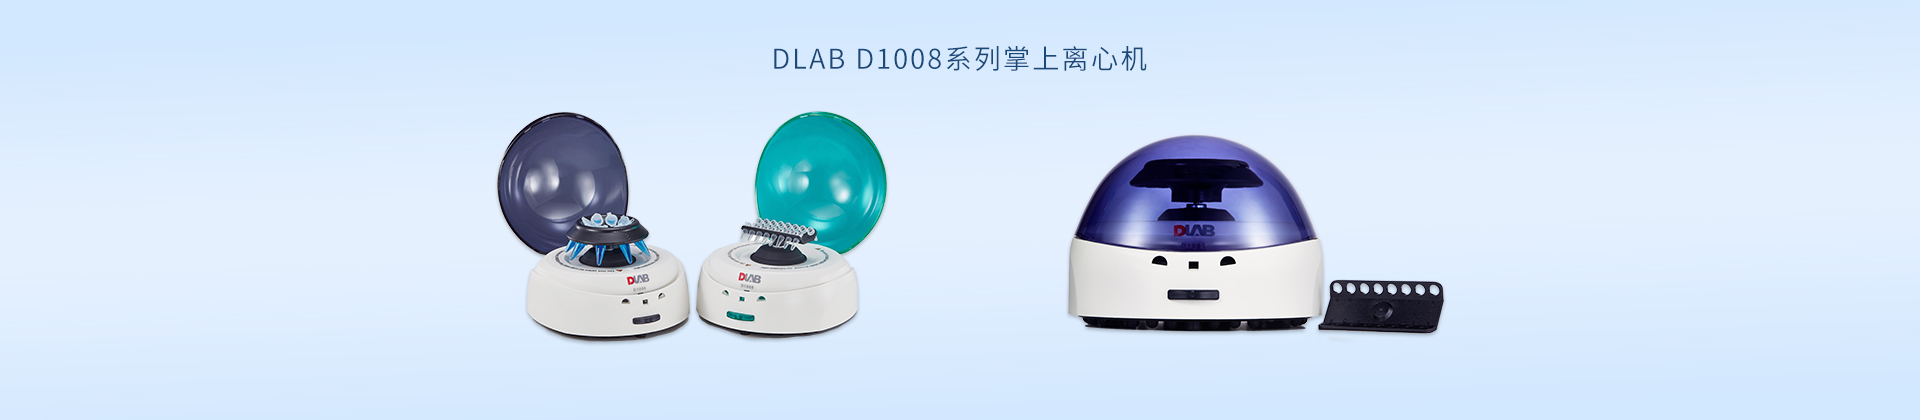 DLAB D1008系列掌上离心机